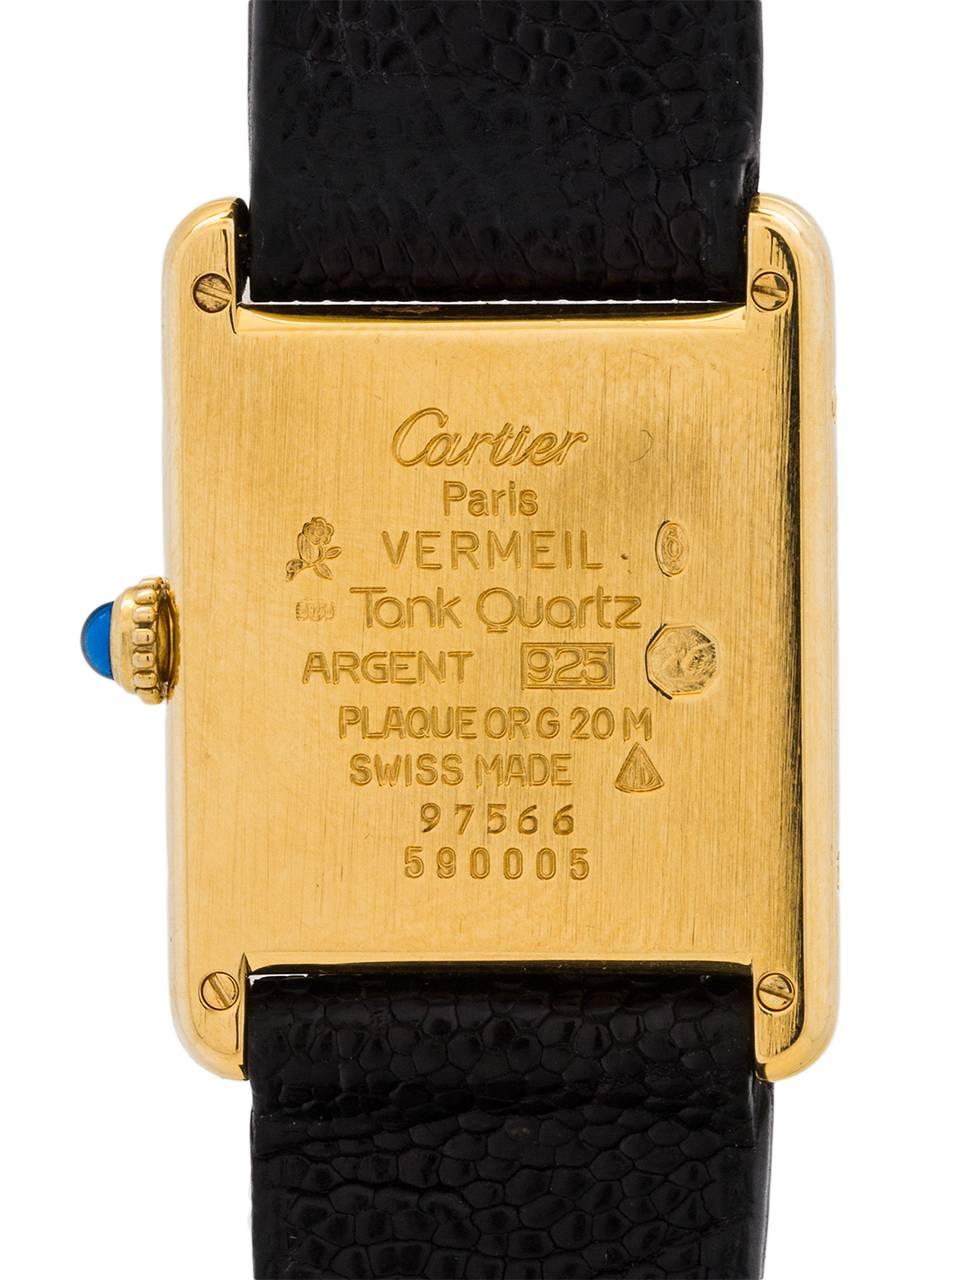 Women's or Men's Cartier Vermeil Tank Louis quartz wristwatch, circa 1990s